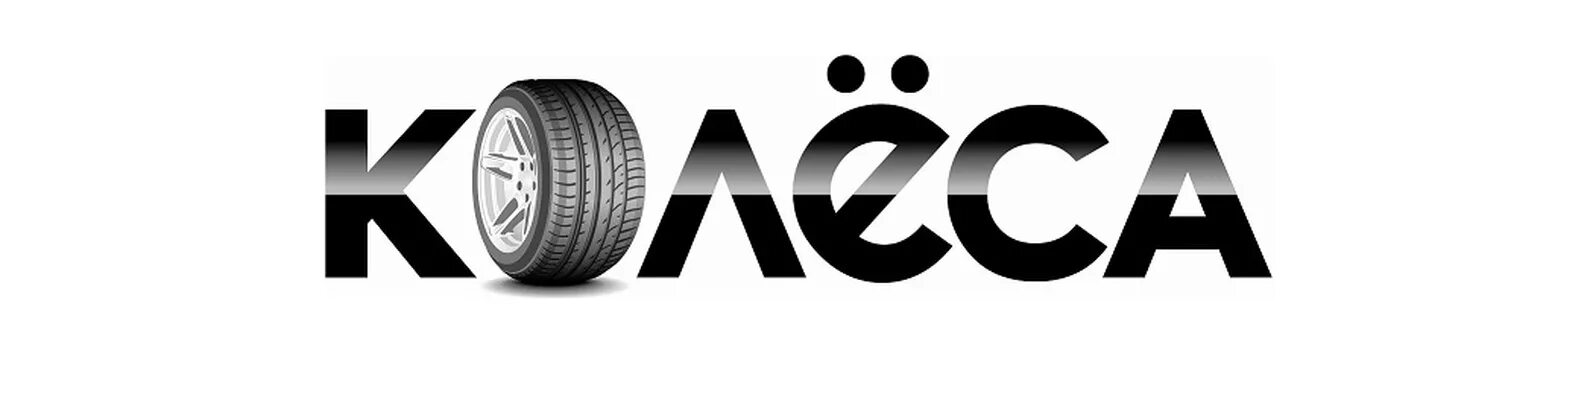 Kolesa. Колеса кз. Сайт колёса kz. Колеса кз логотип. Машина лого.